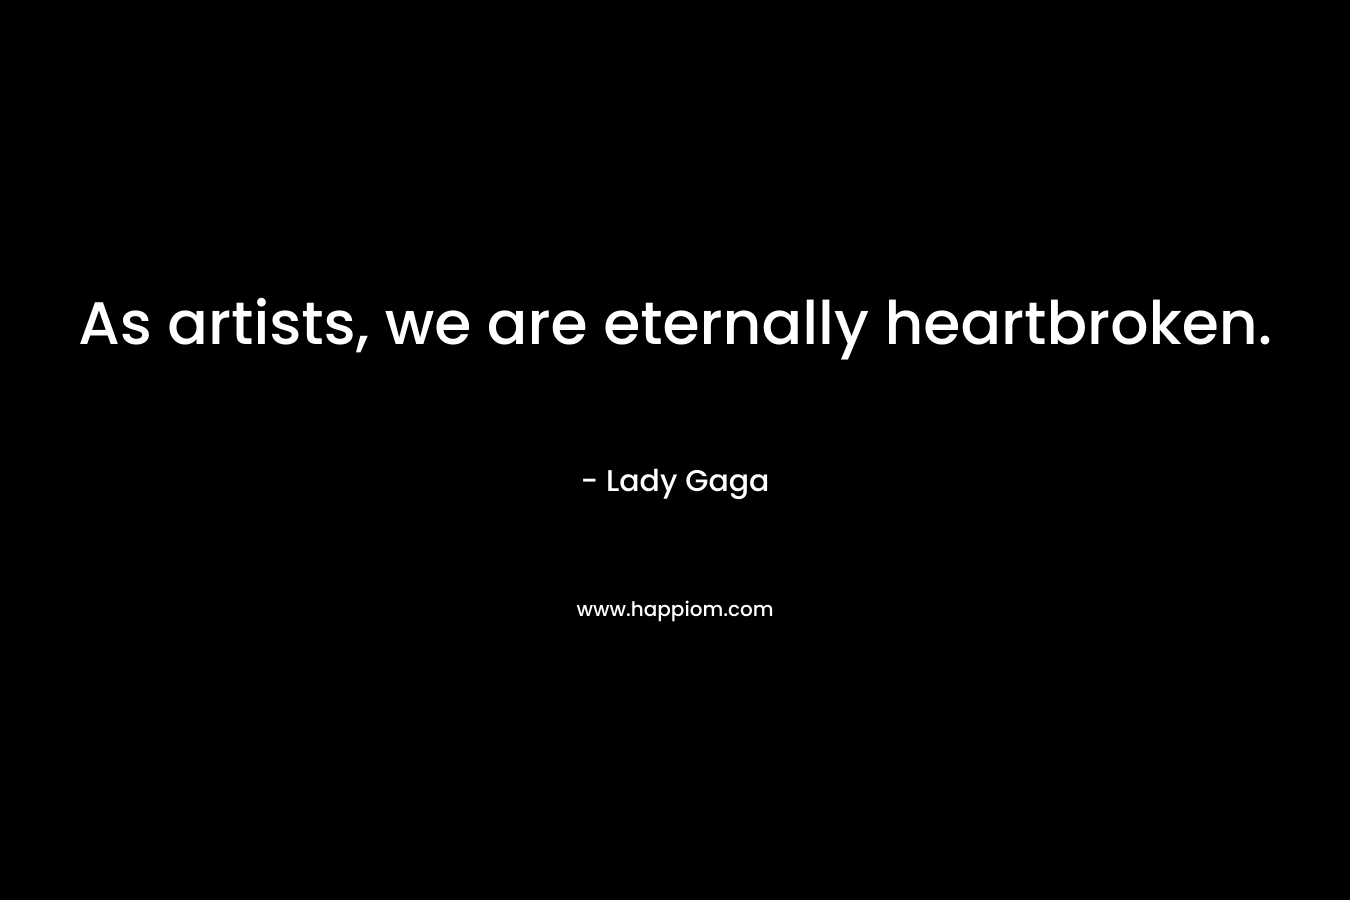 As artists, we are eternally heartbroken. – Lady Gaga